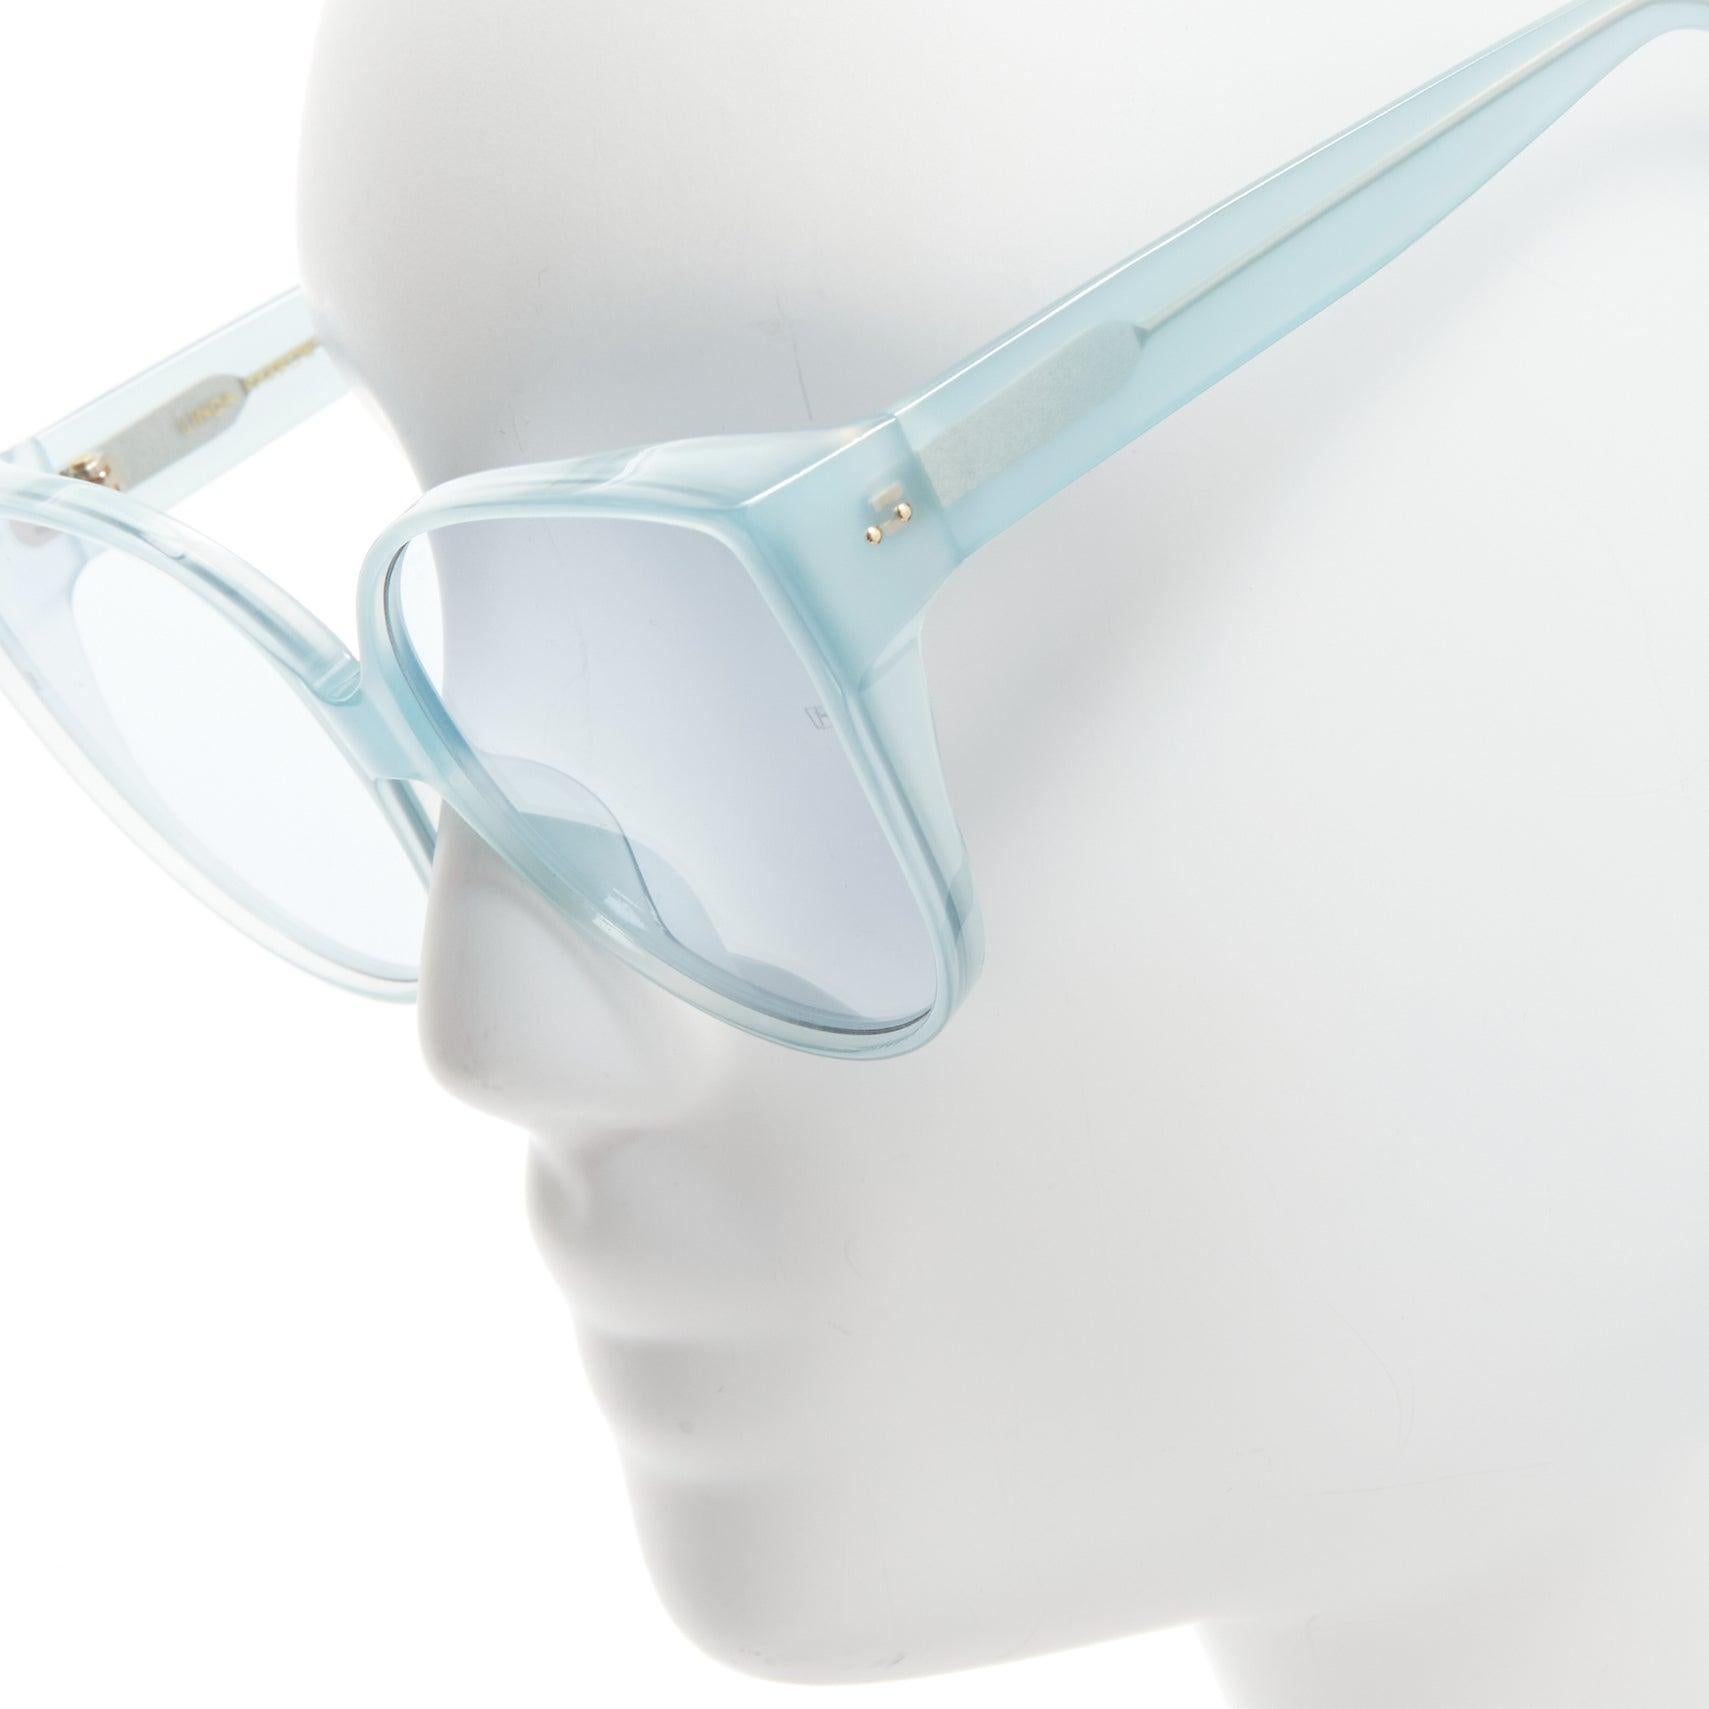 LINDA FARROW LFL656/9 übergroße Sonnenbrille aus blauem Acetat clear lens
Referenz: BSHW/A00092
Marke: Linda Farrow
Modell: LFL656/9
MATERIAL: Acetat
Farbe: Blau
Muster: Solide
Verschluss: Anziehen
Innenfutter: Blaues Acetat
Hergestellt in: